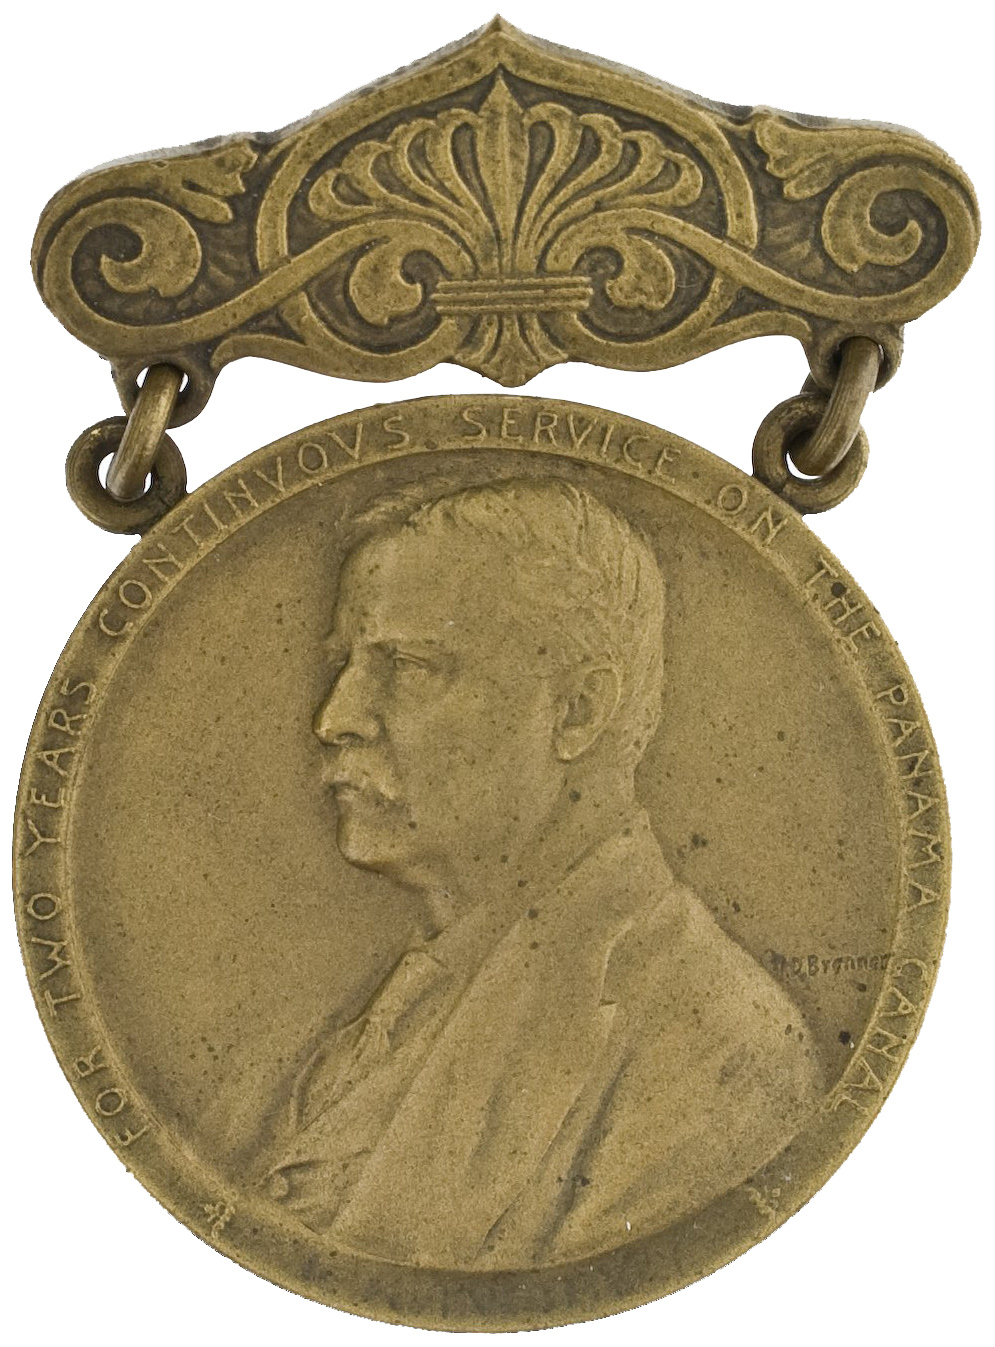 Hahlo-103-105, Panama Canal Service Medal badge